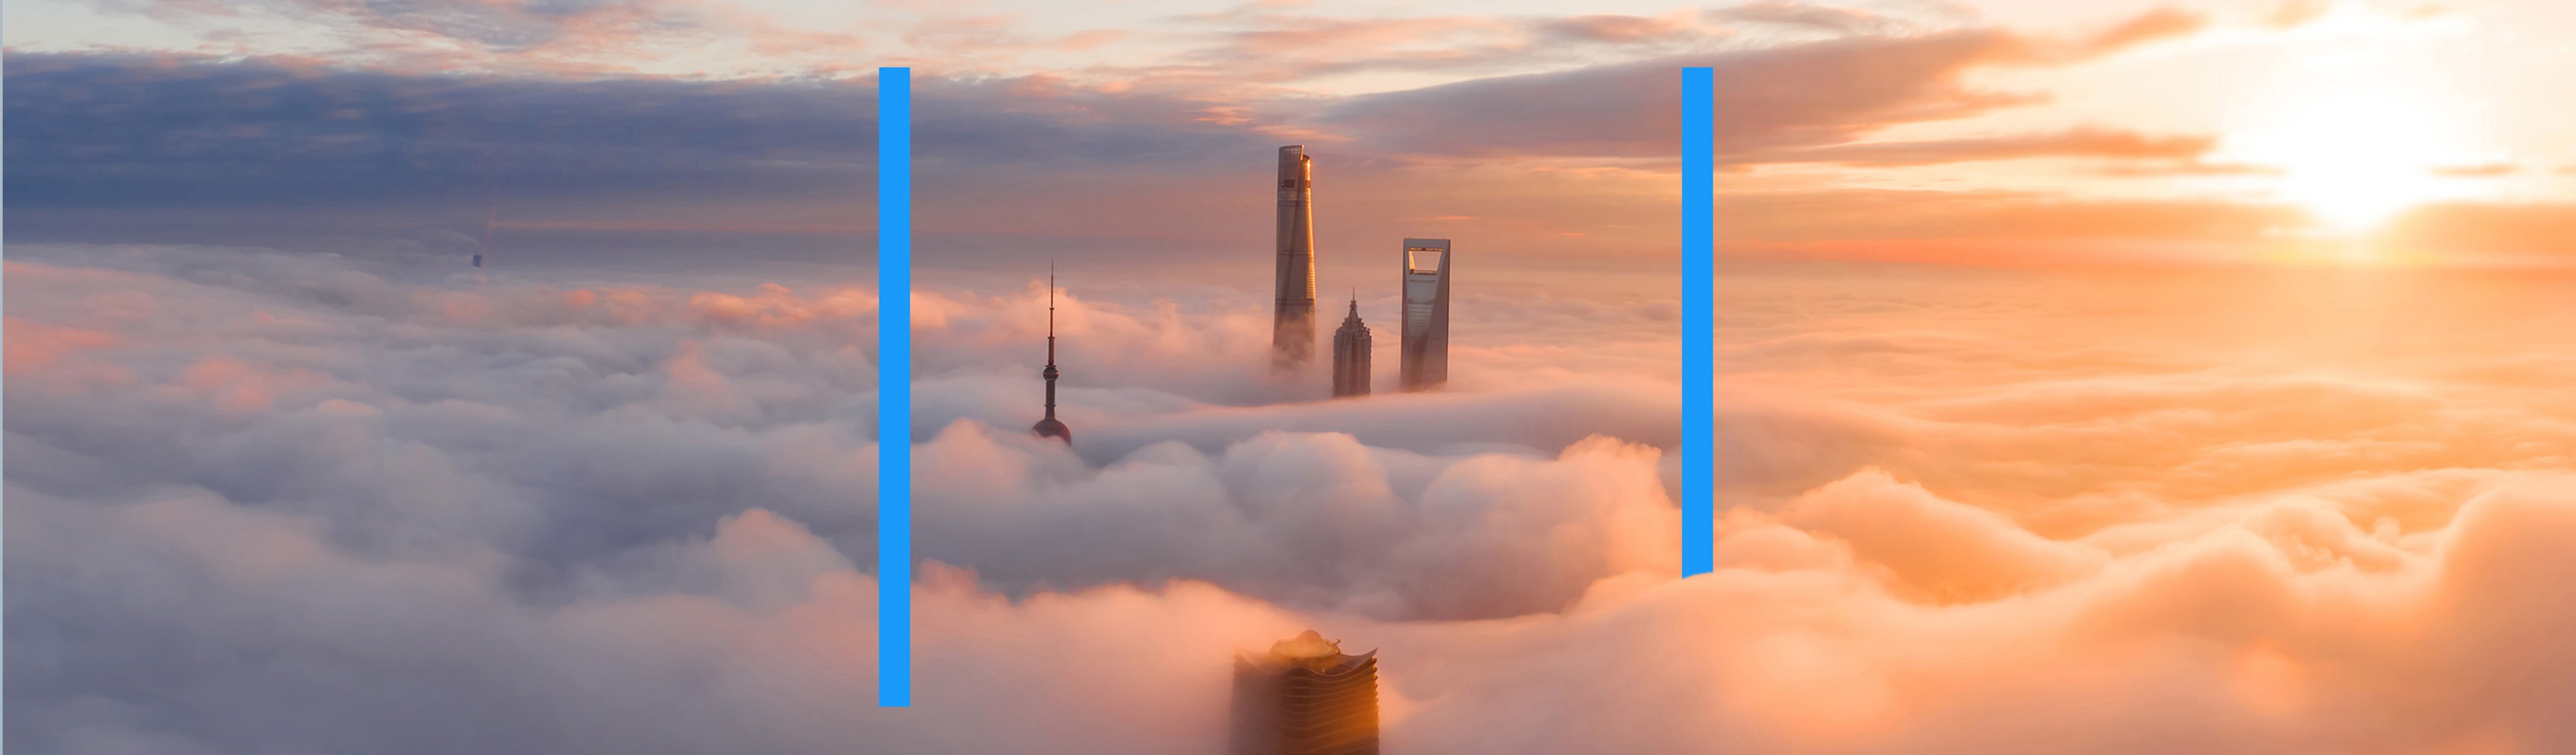 Shanghai skyline in heavy fog